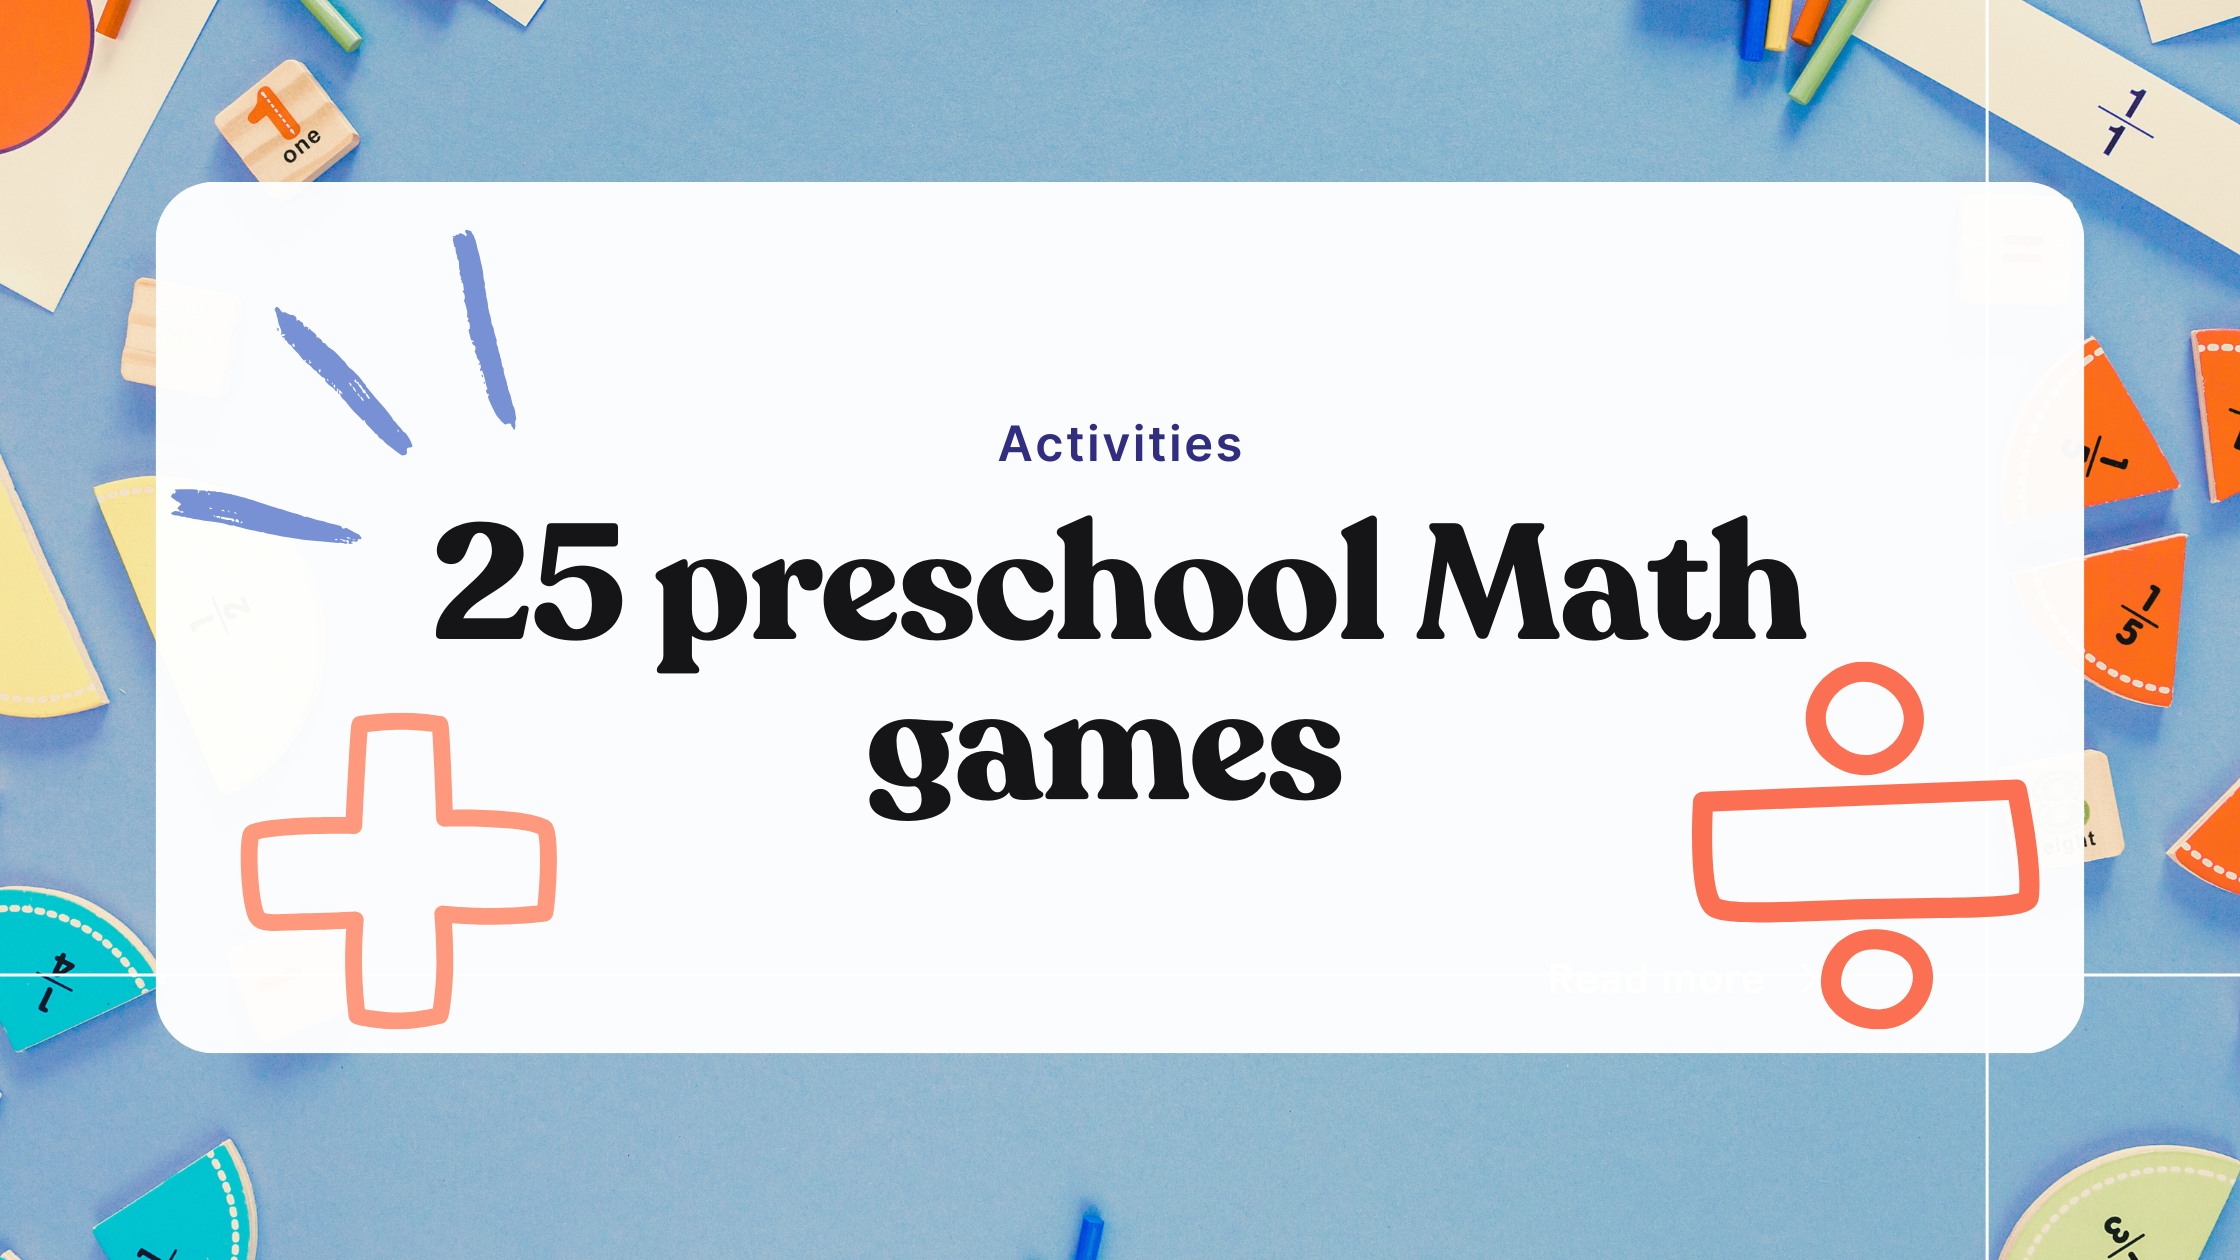 25 preschool math games for mathematicians-in-training